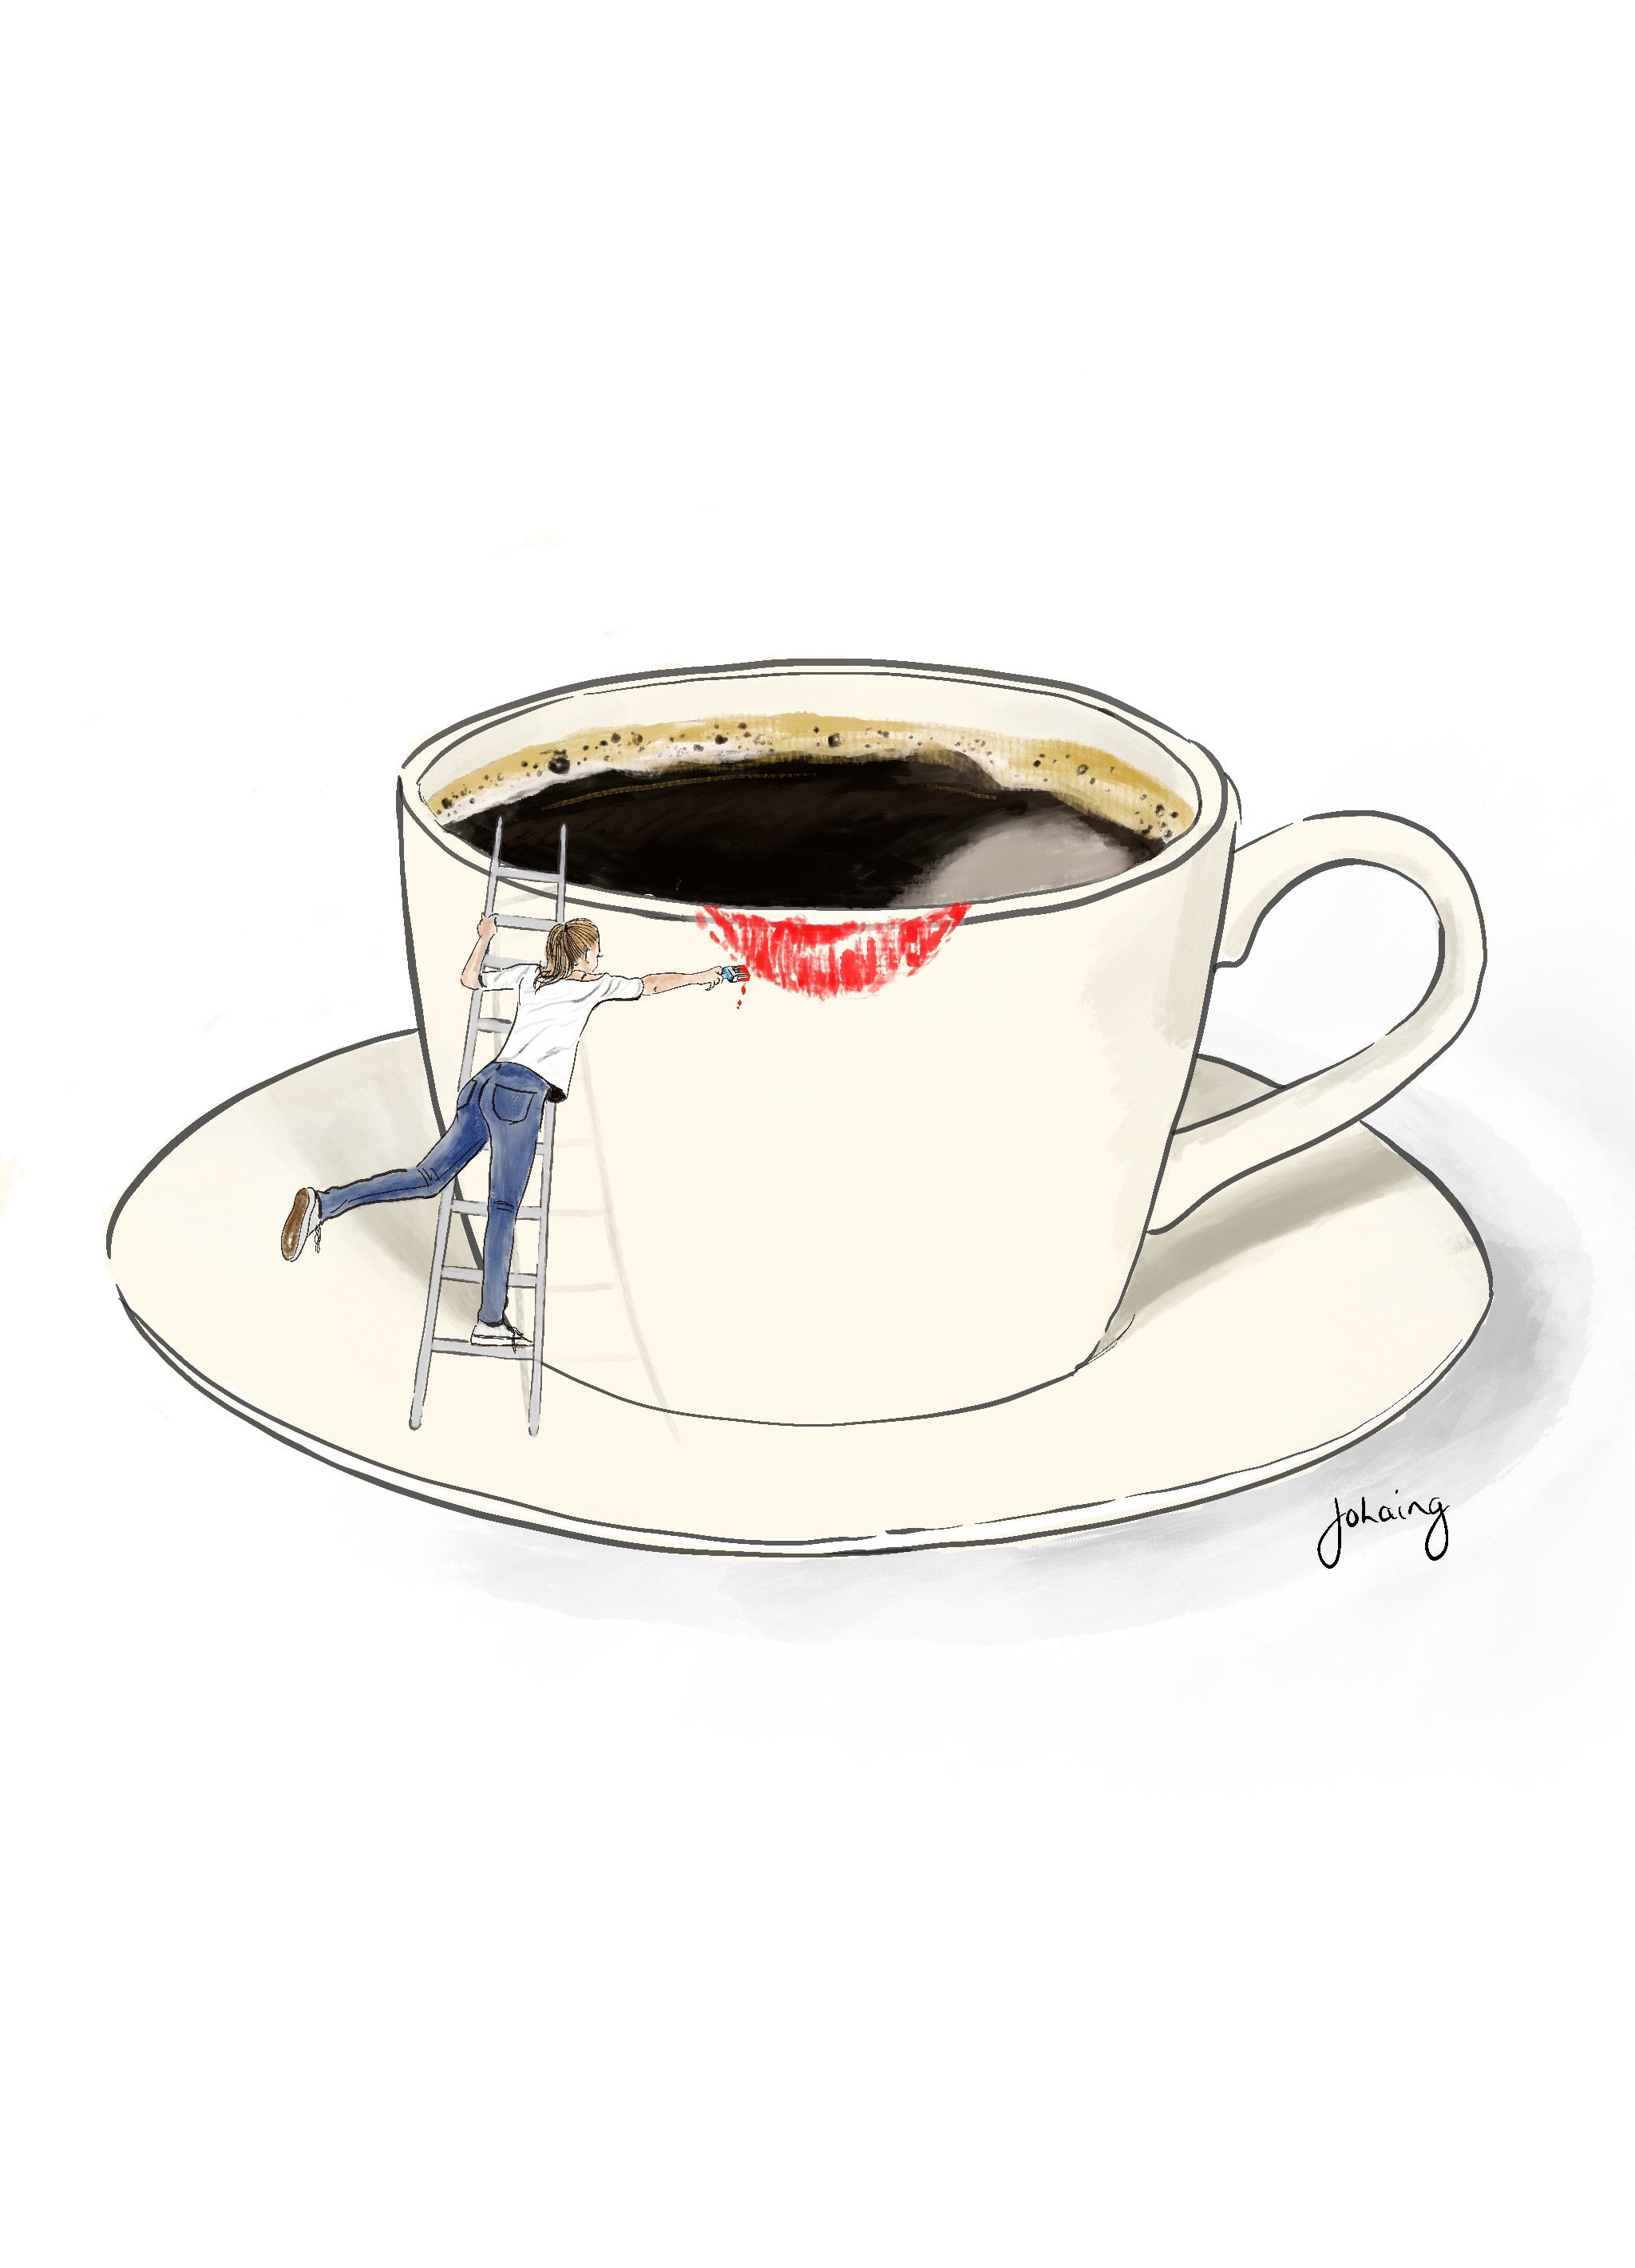 Wake Up and Make Up Coffee Art Print